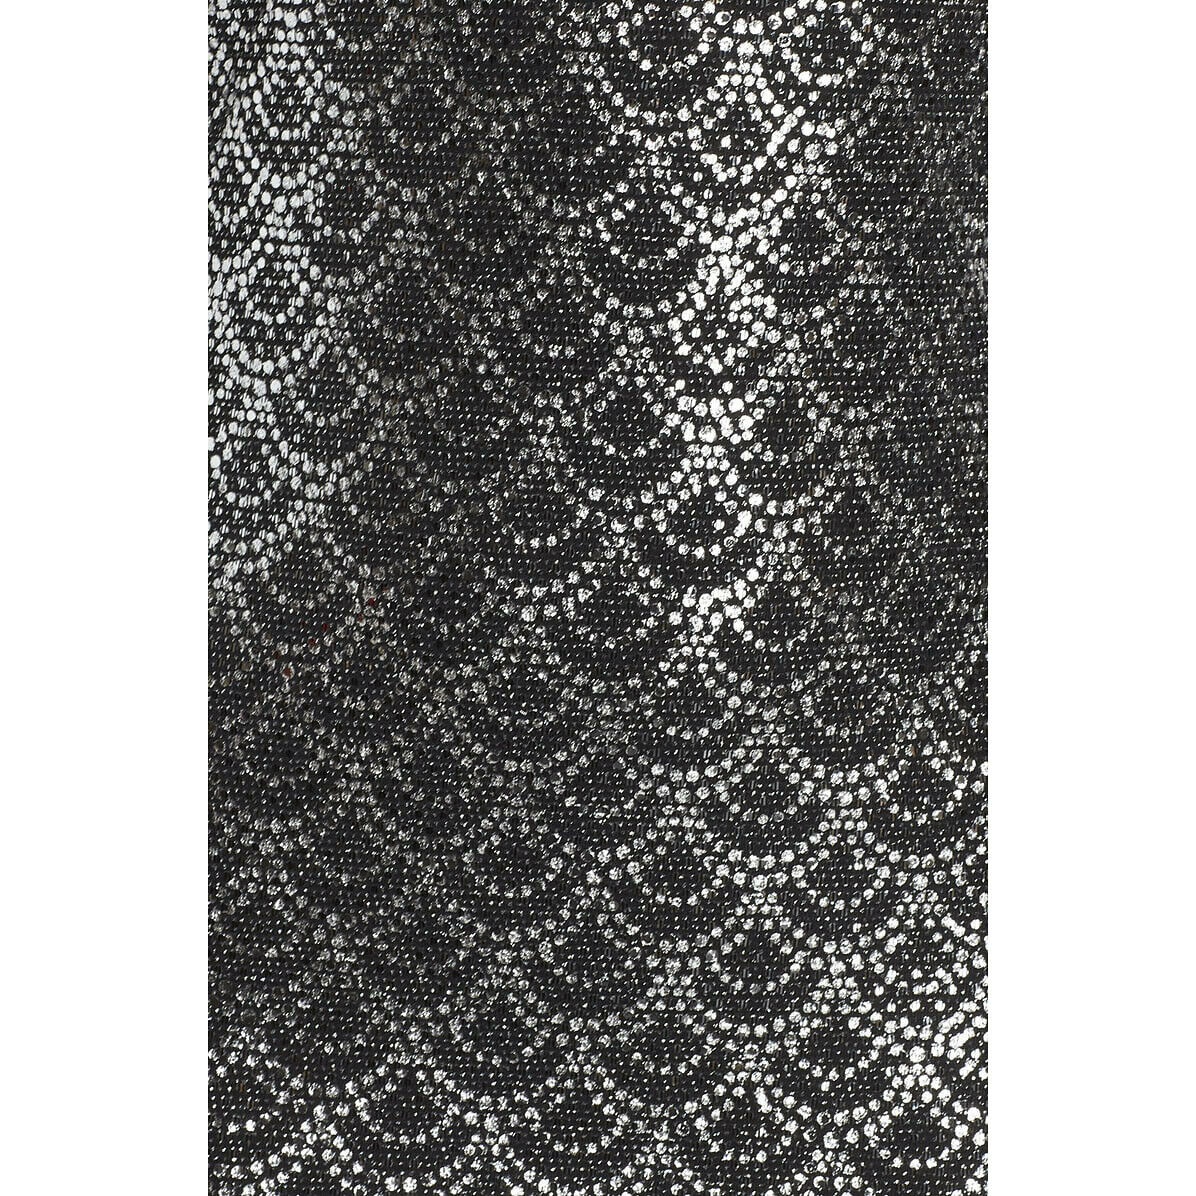 Michael Kors Black Silver Scallop Glitter Lame Cowl Back Chain Dress XS NWT